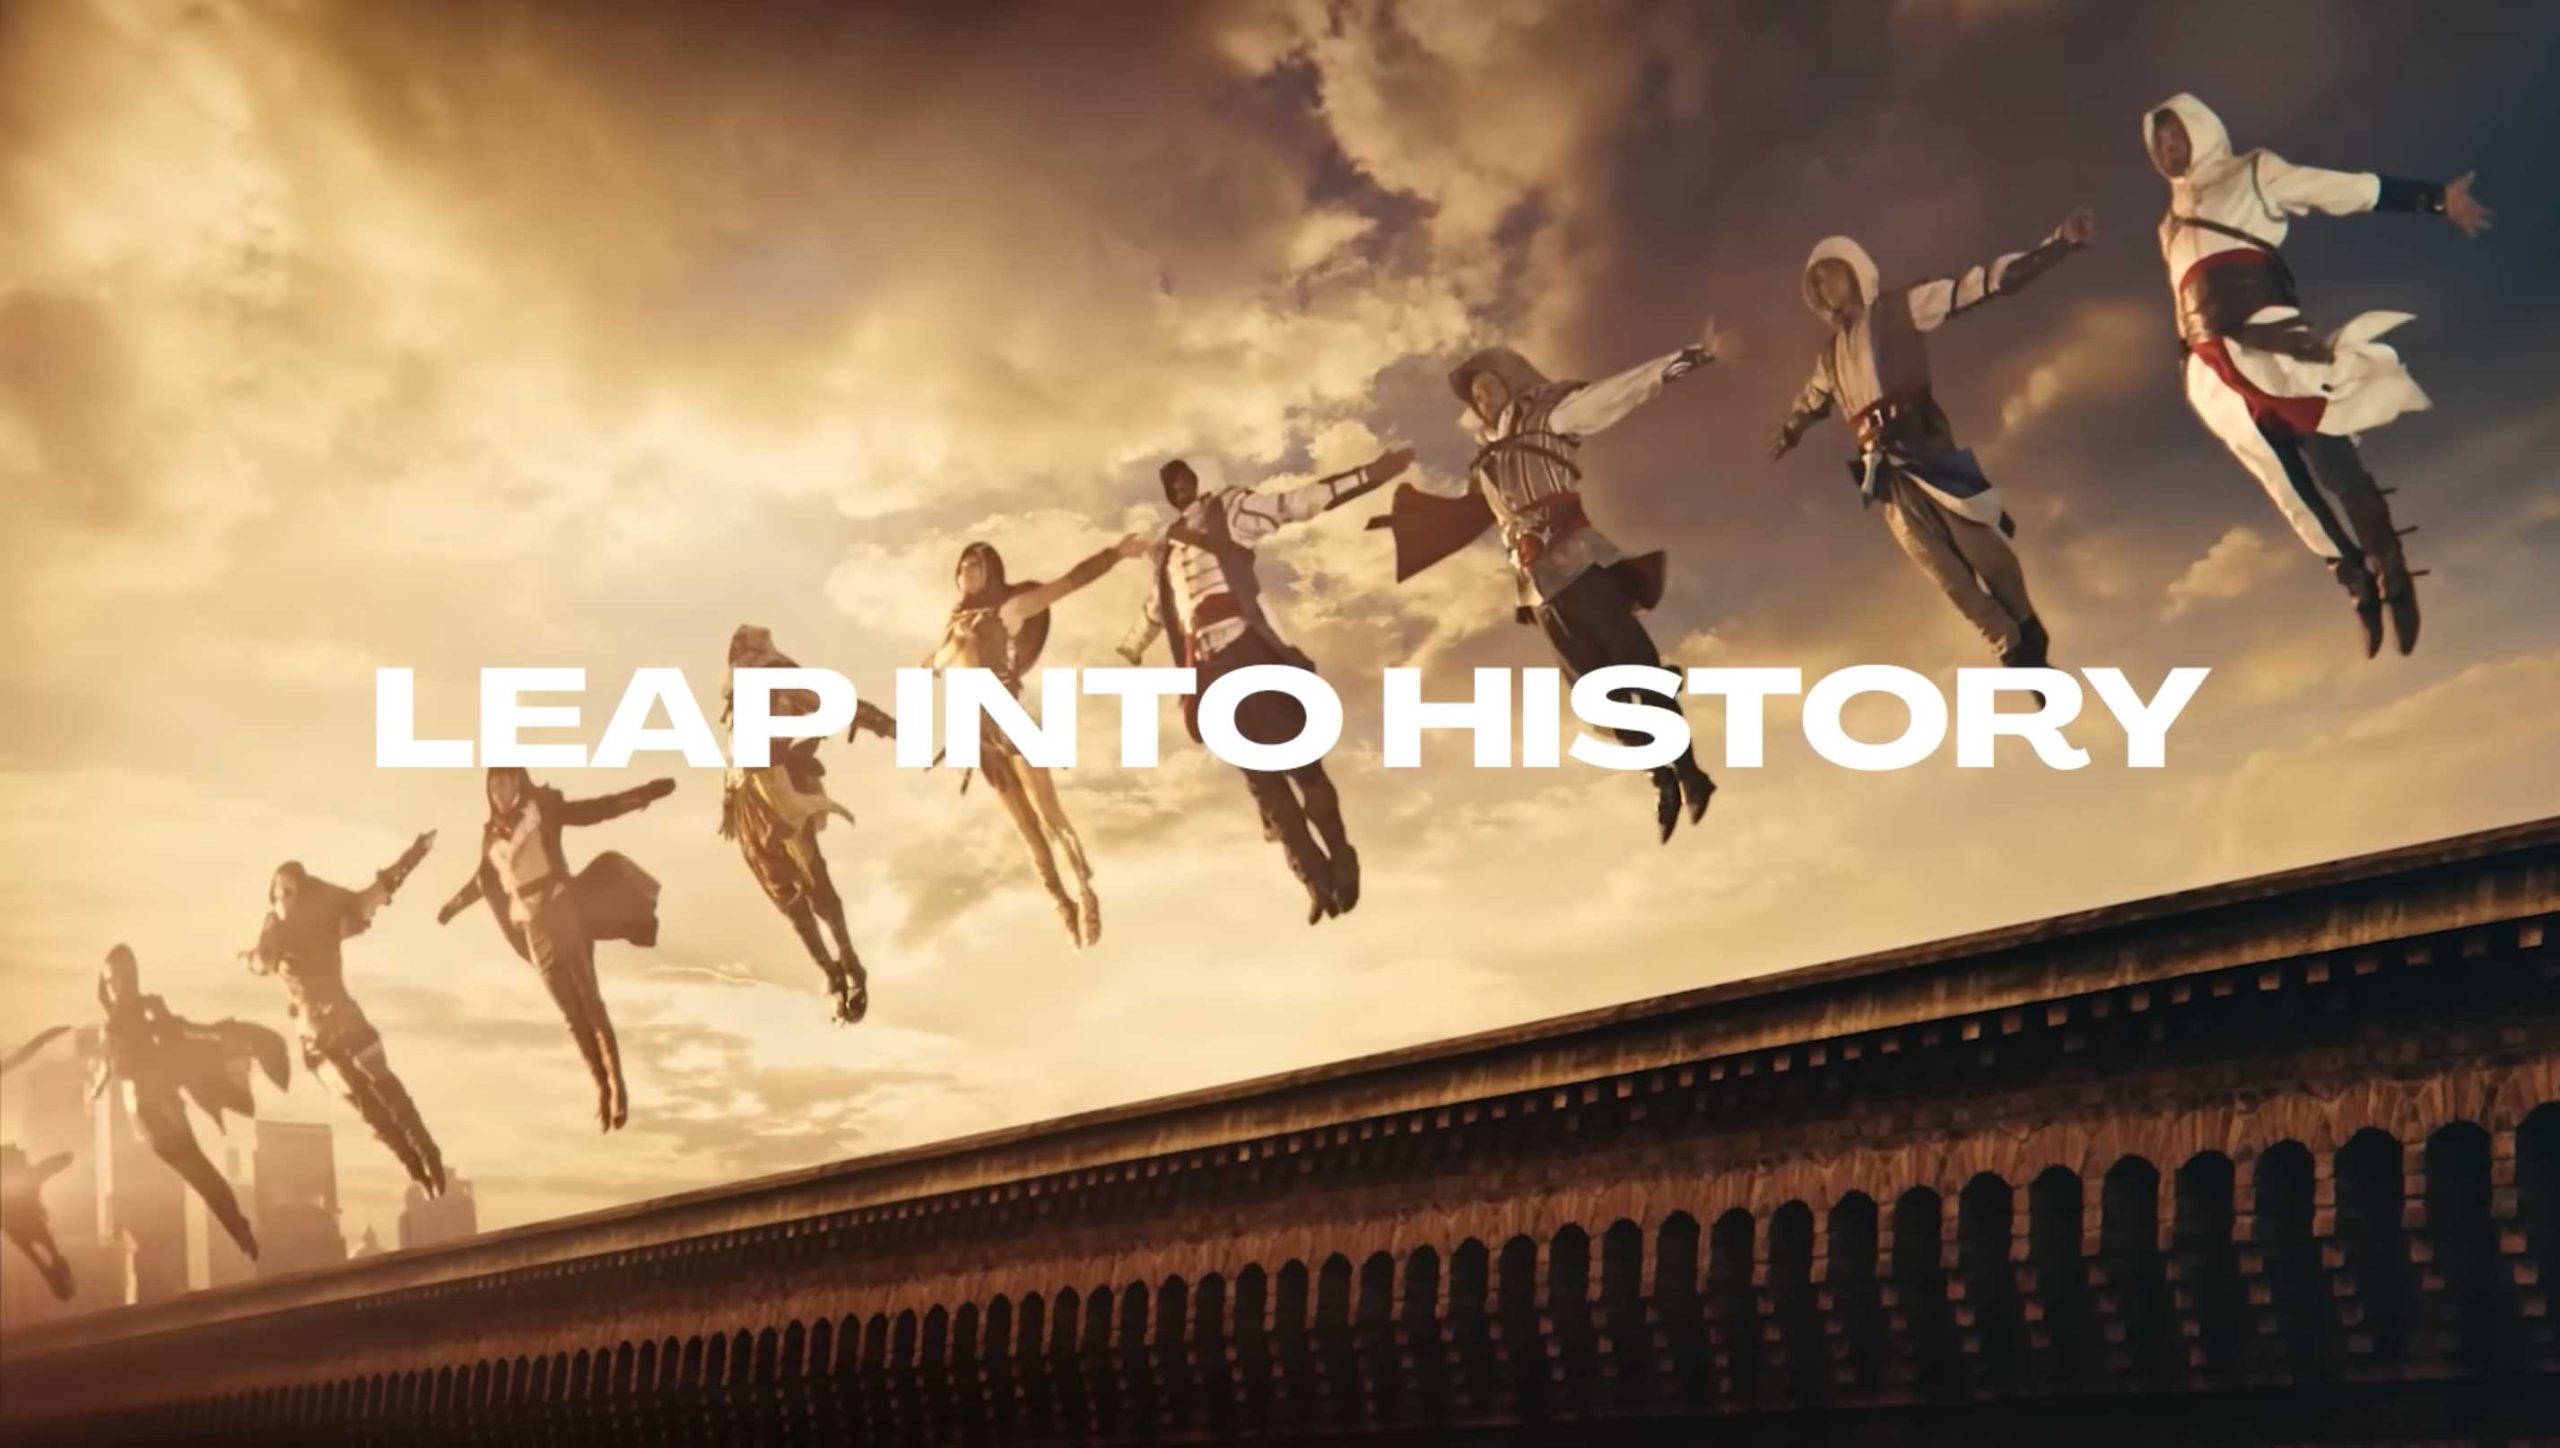 Leap into History Assassins Creed 15th Anniversary Trailer | STASH MAGAZINE